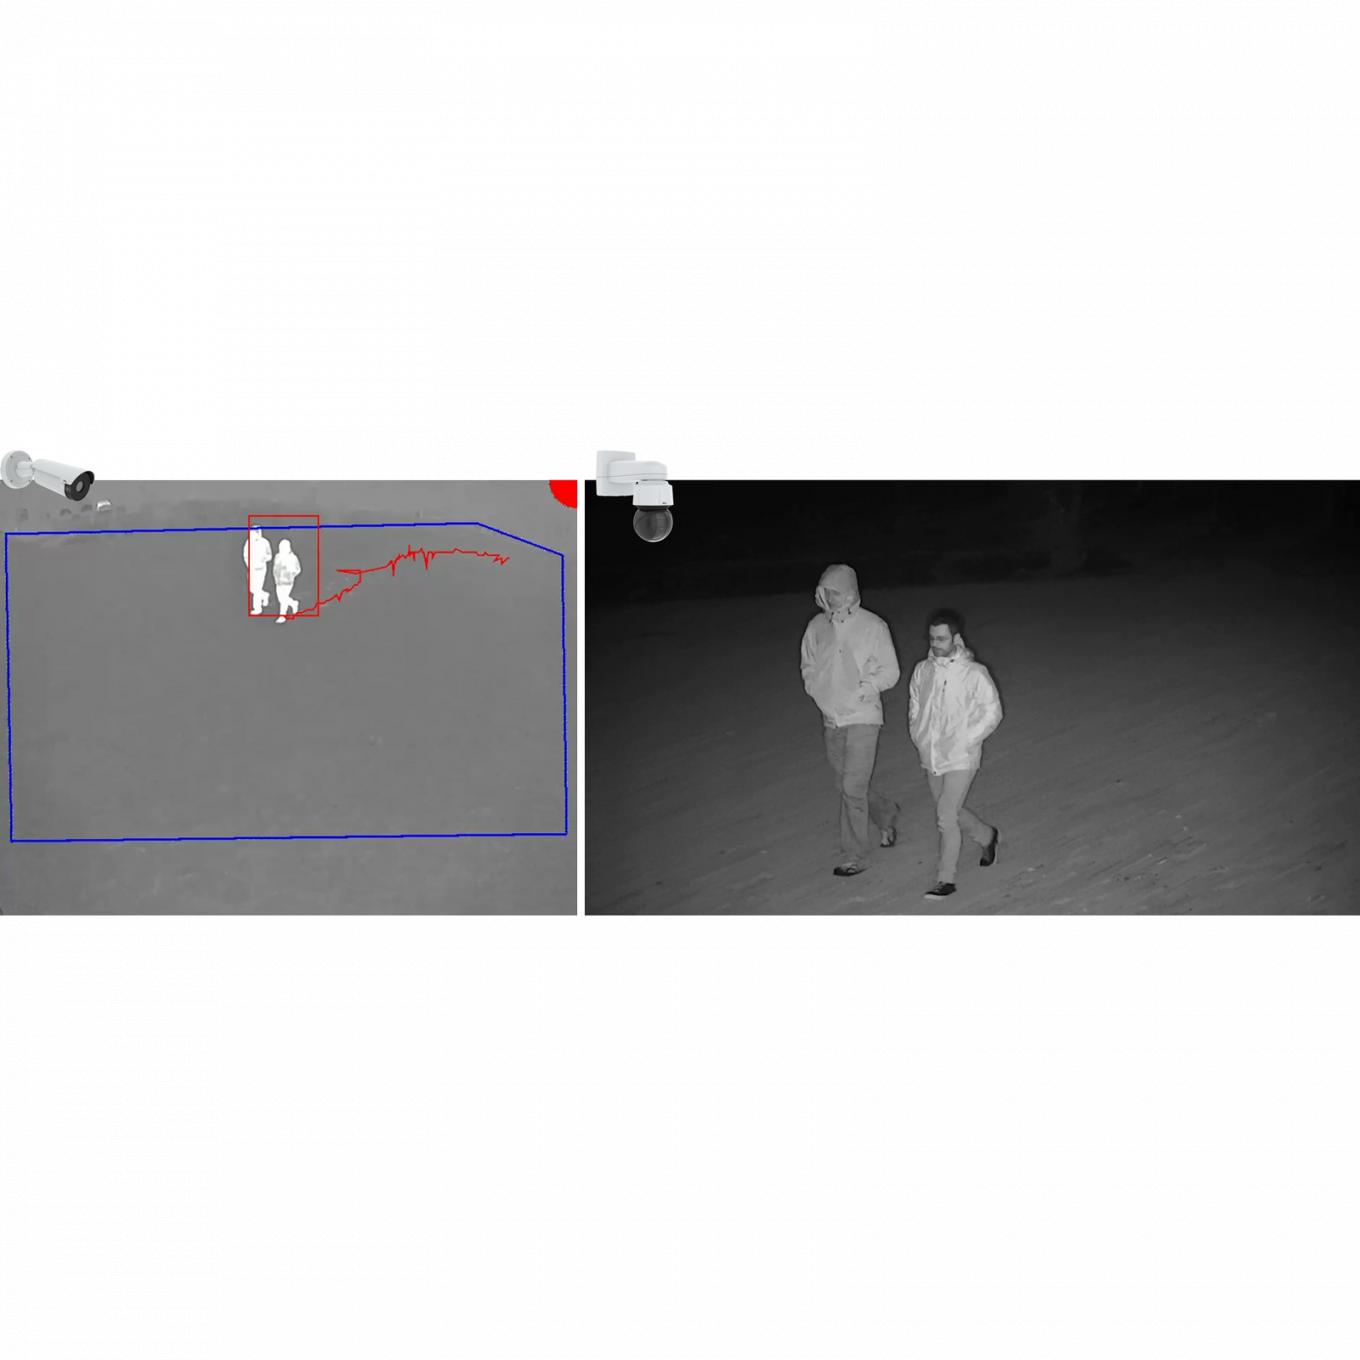 AXIS Perimeter Defender PTZ Autotracking, черно-белое фото двух идущих мужчин